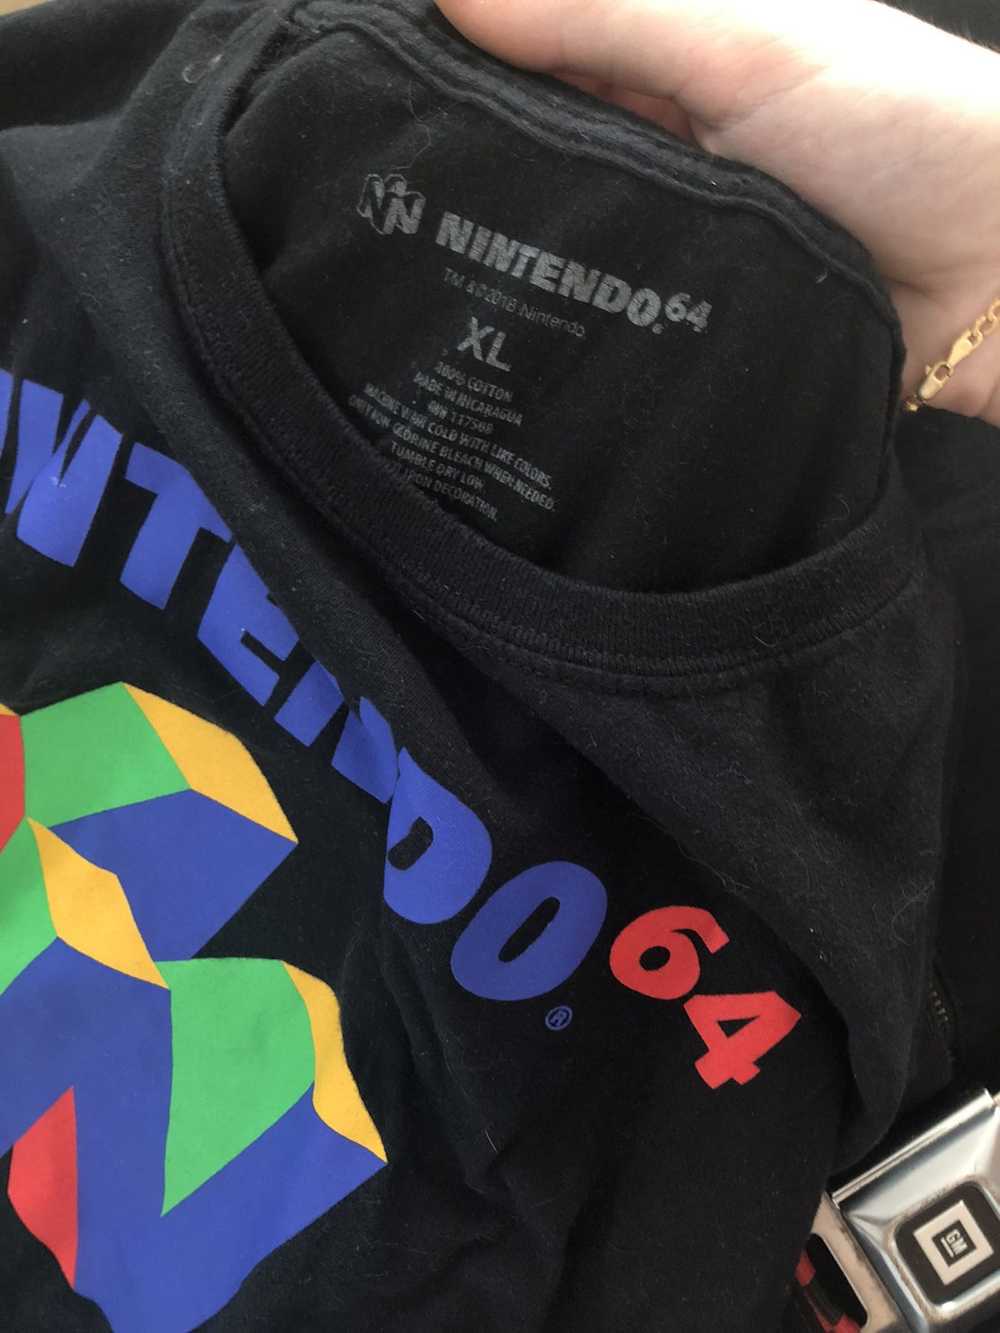 Nintendo Nintendo 64 Black T-shirt - image 2